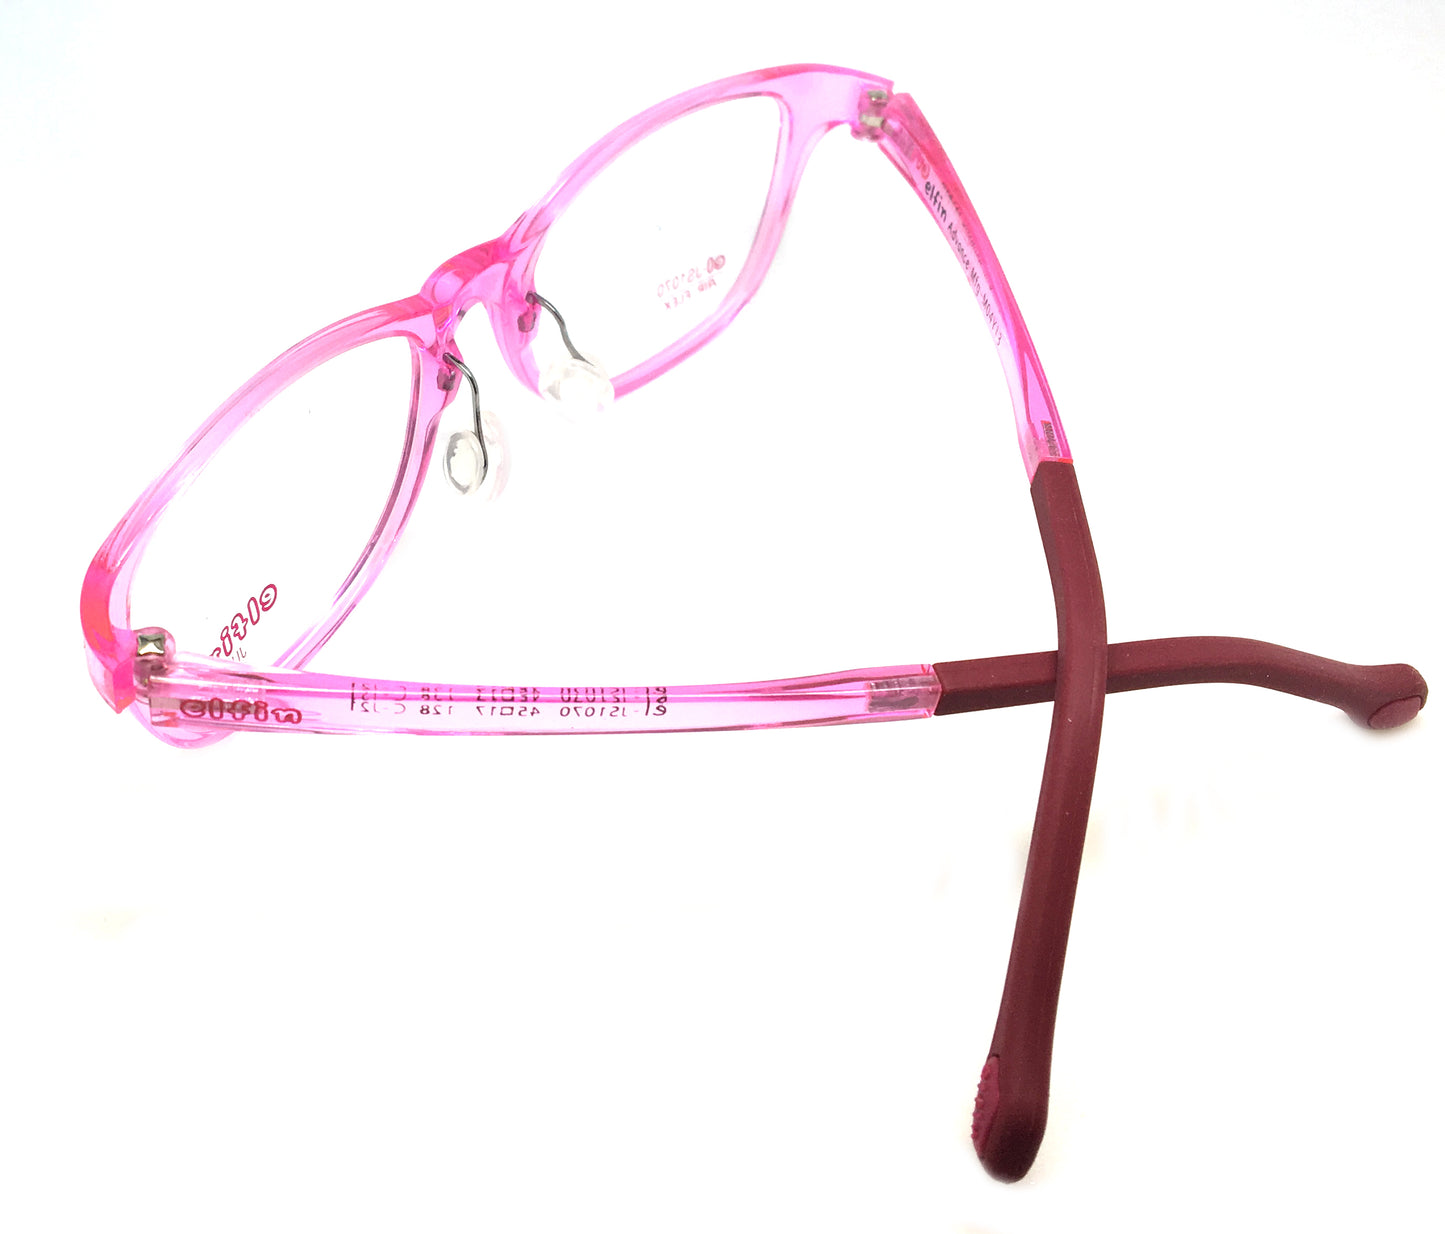 Elfin Eyeglasses Kids Super Flexible Frame 1070 CJ 21